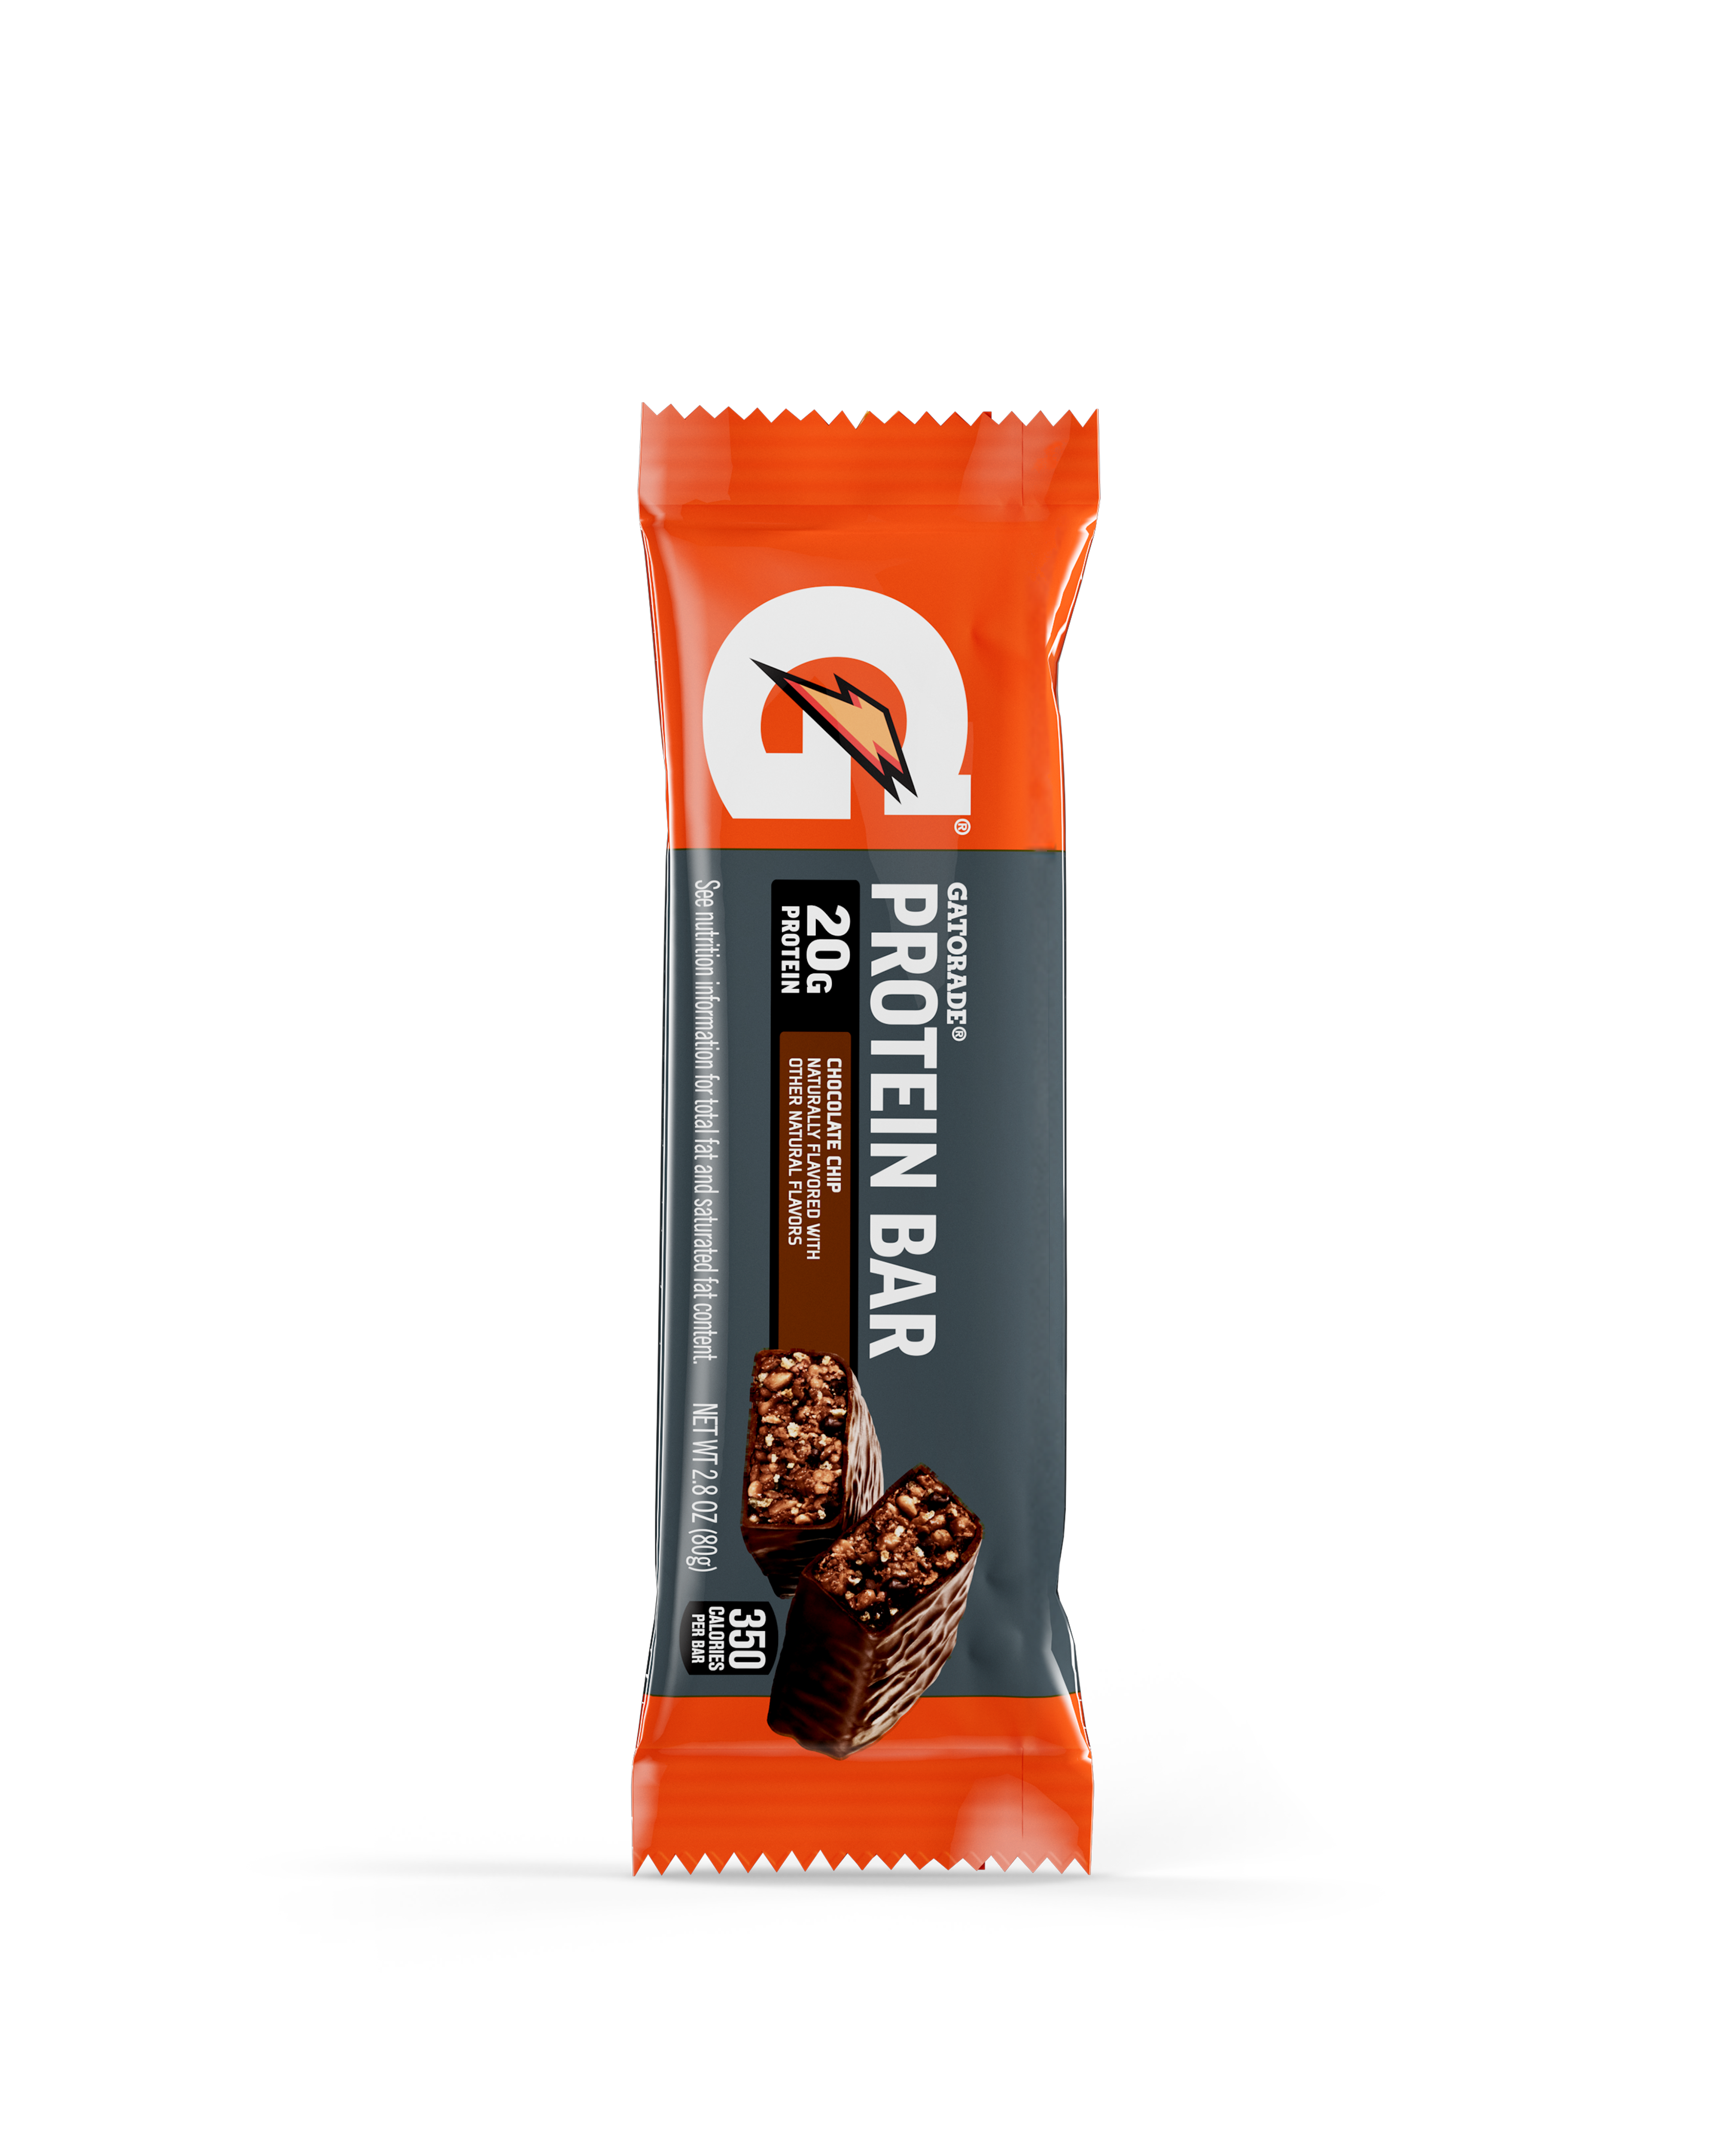  Gatorade Recover Protein Shake, Chocolate, 20g